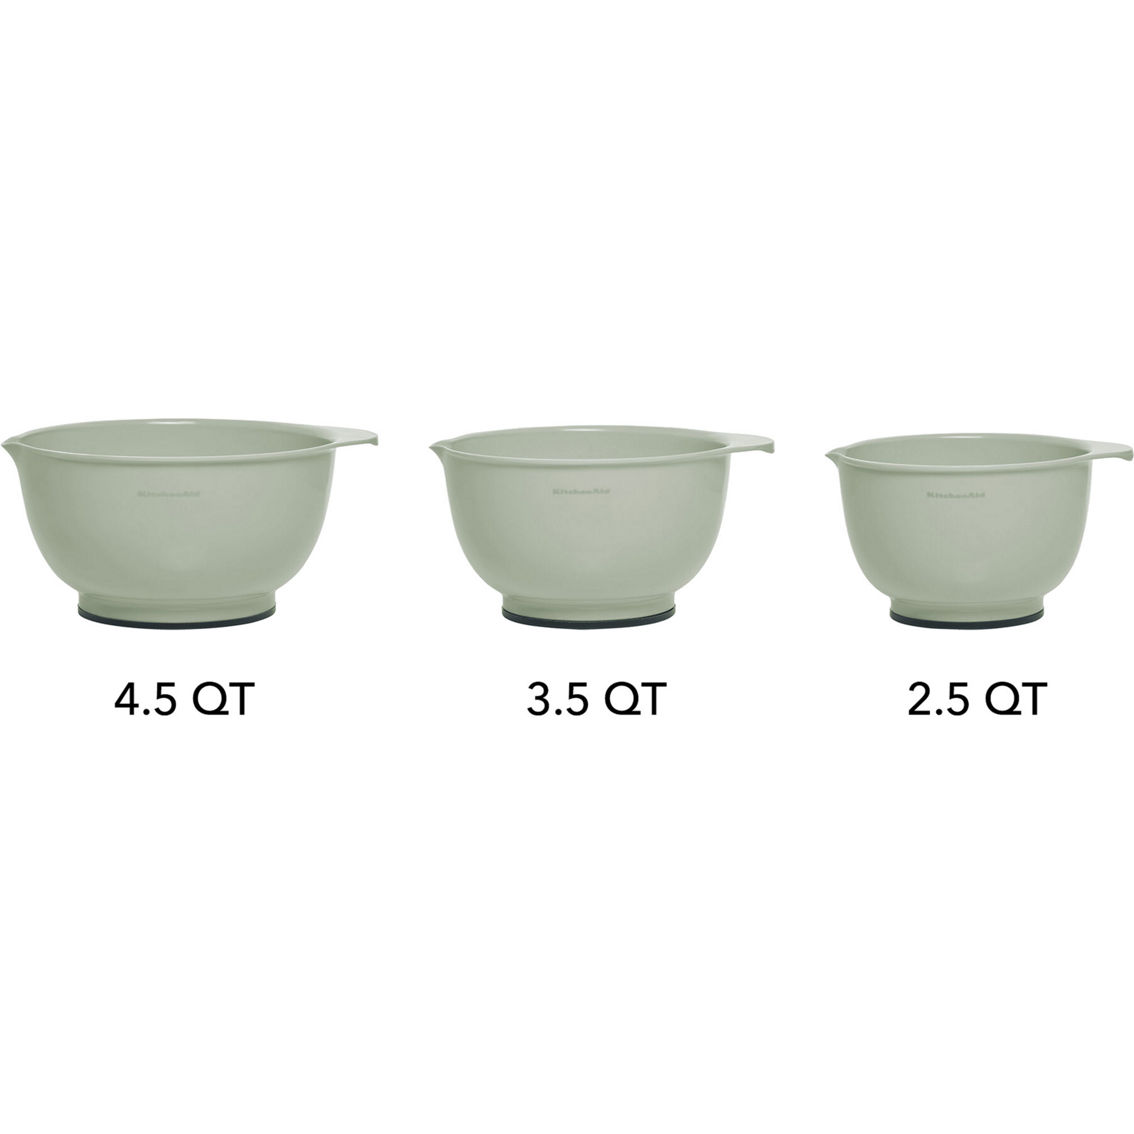 KitchenAid Mixing Bowls, Set of 3, Pistachio - Image 4 of 5